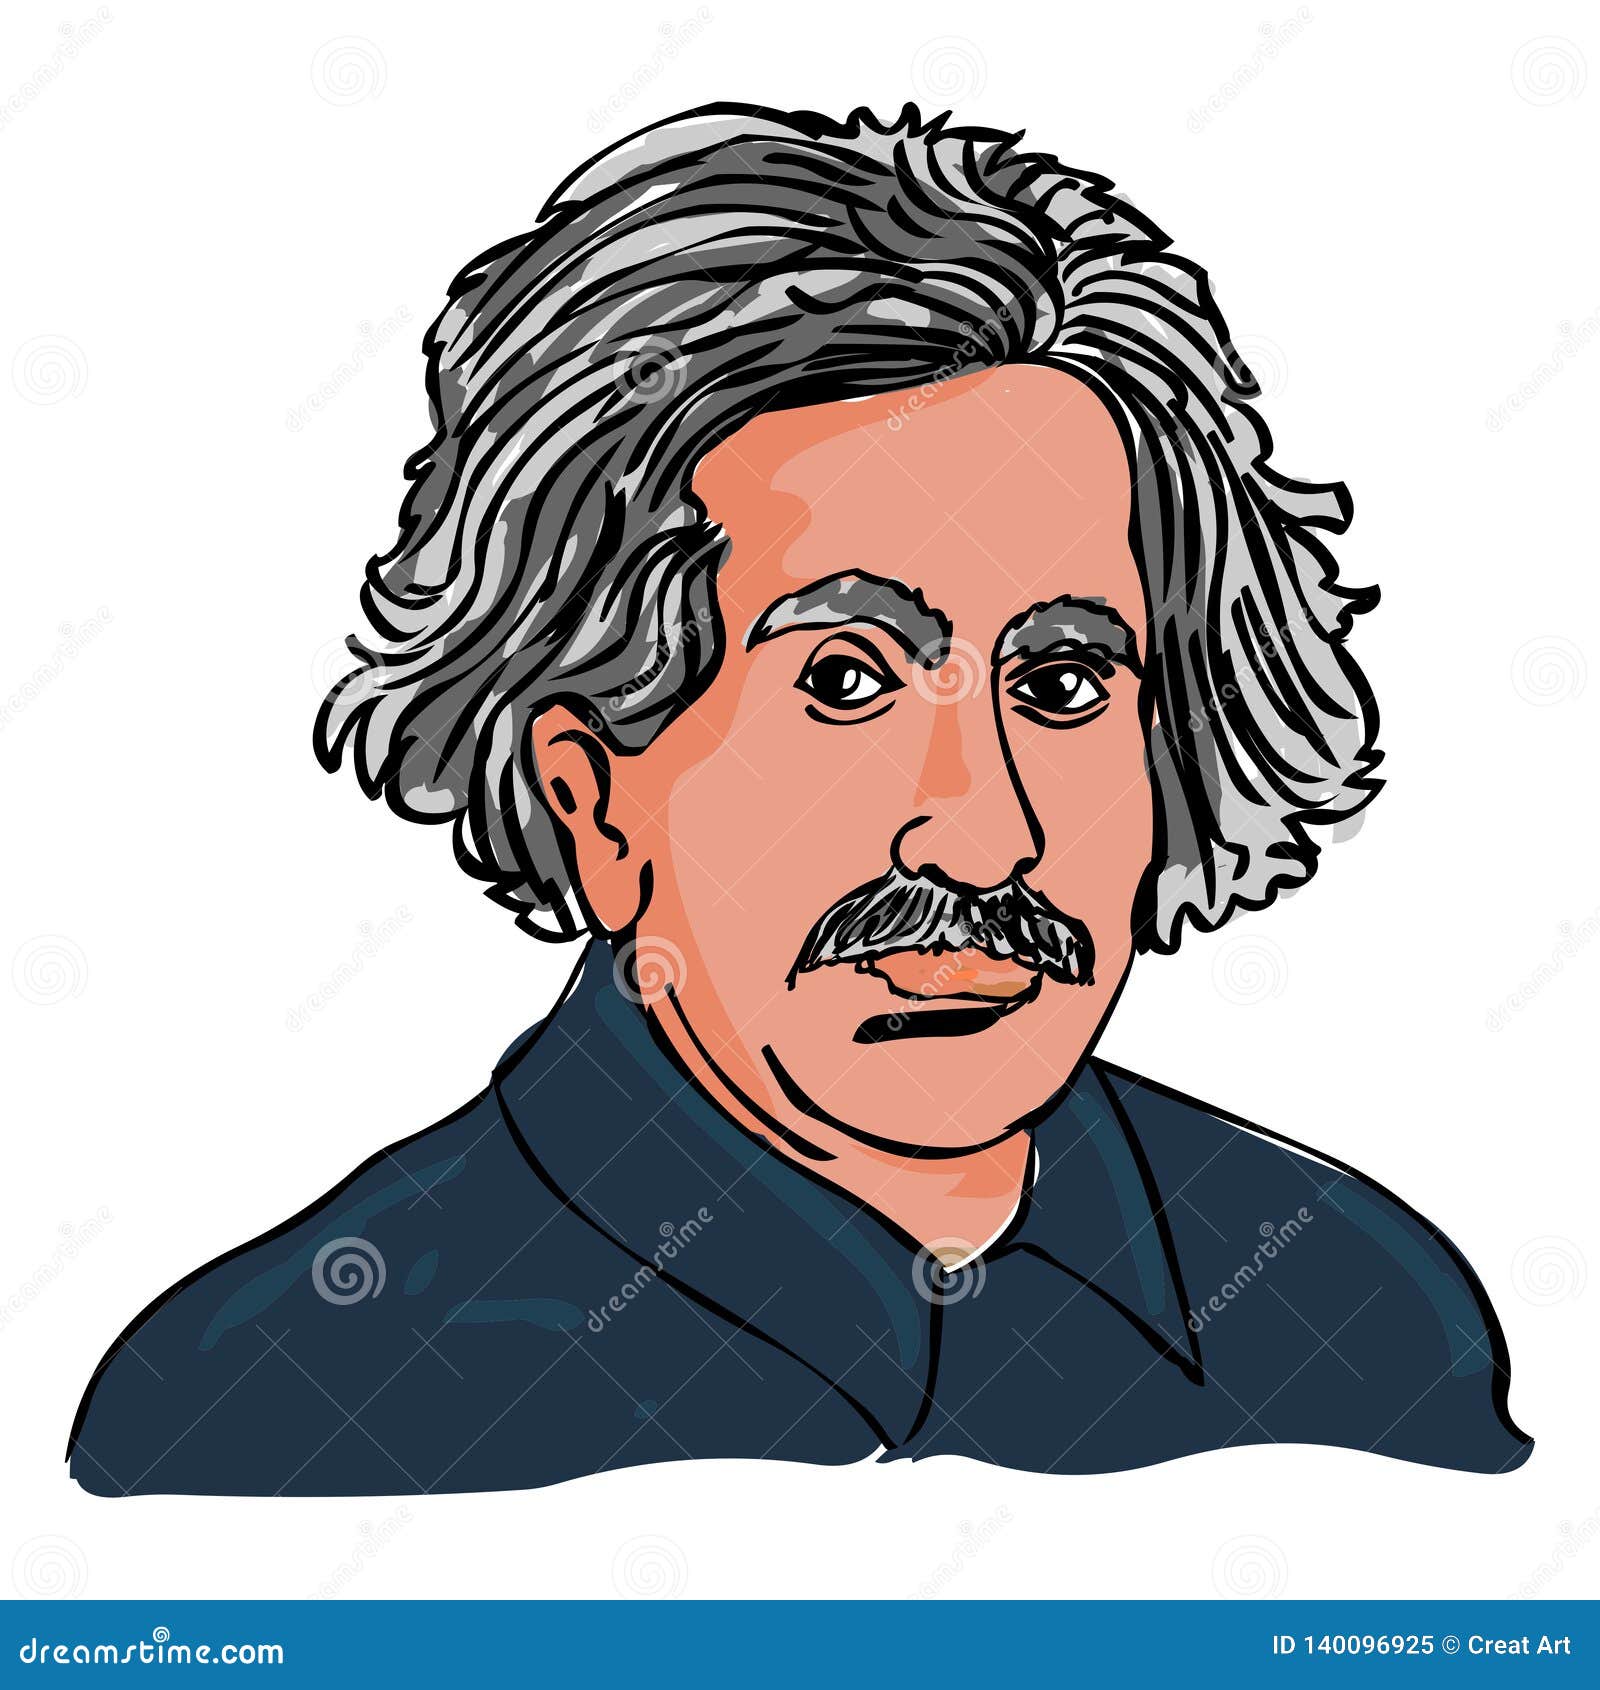 Albert Einstein Drawing - Drawing Skill